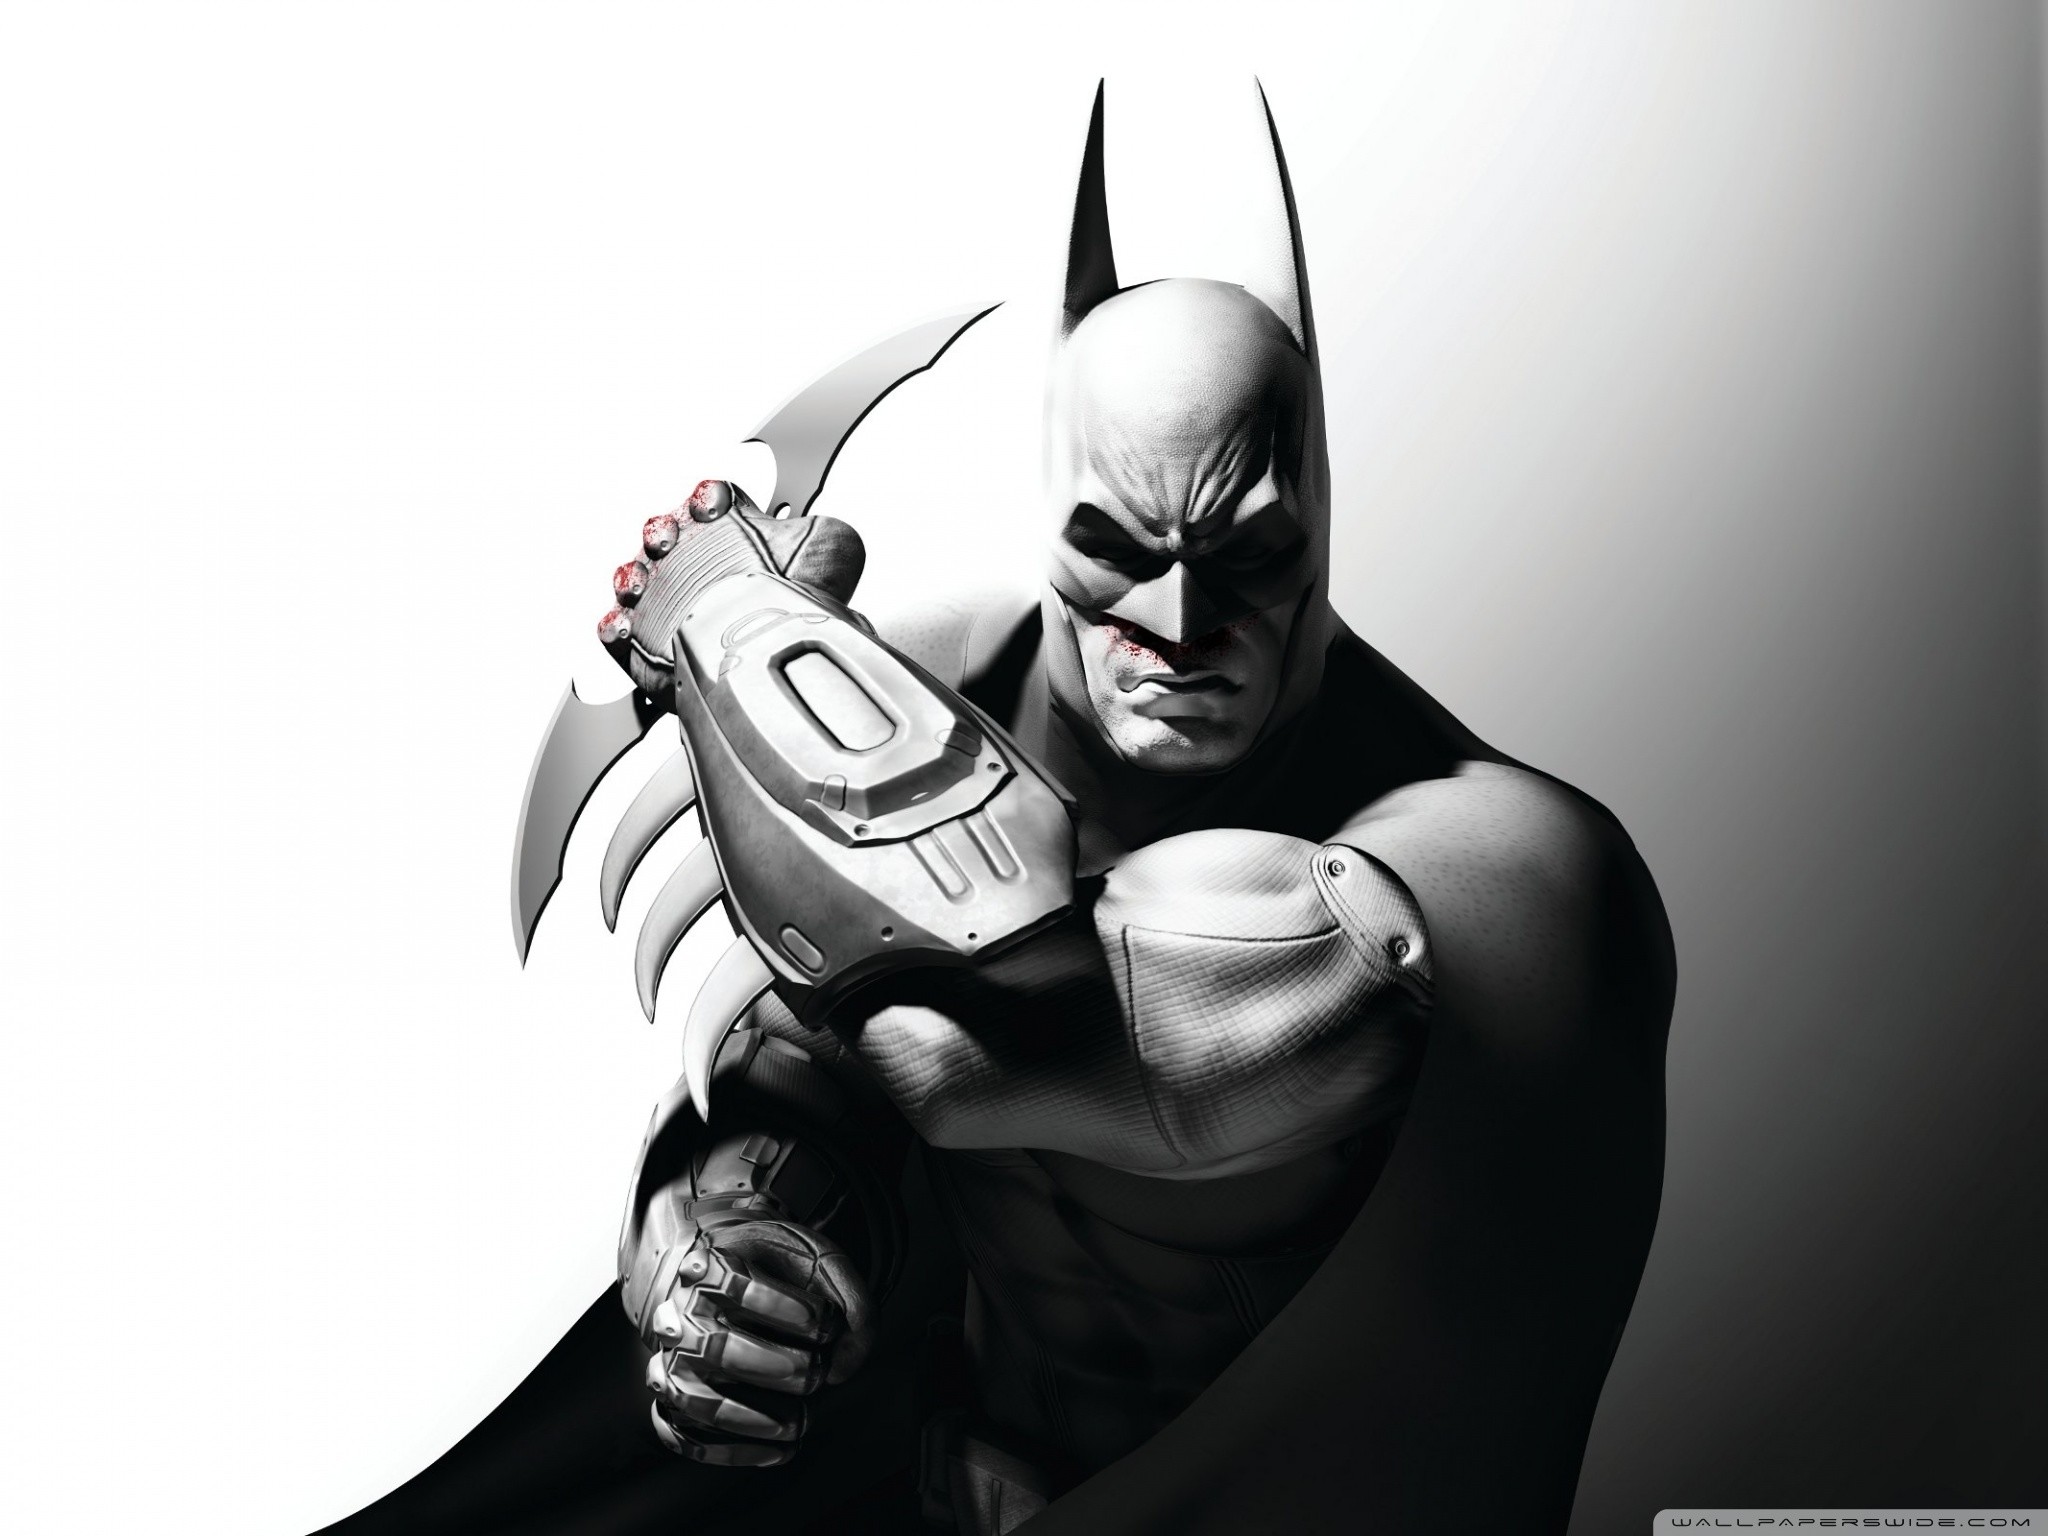 Batman: Arkham City Wallpapers